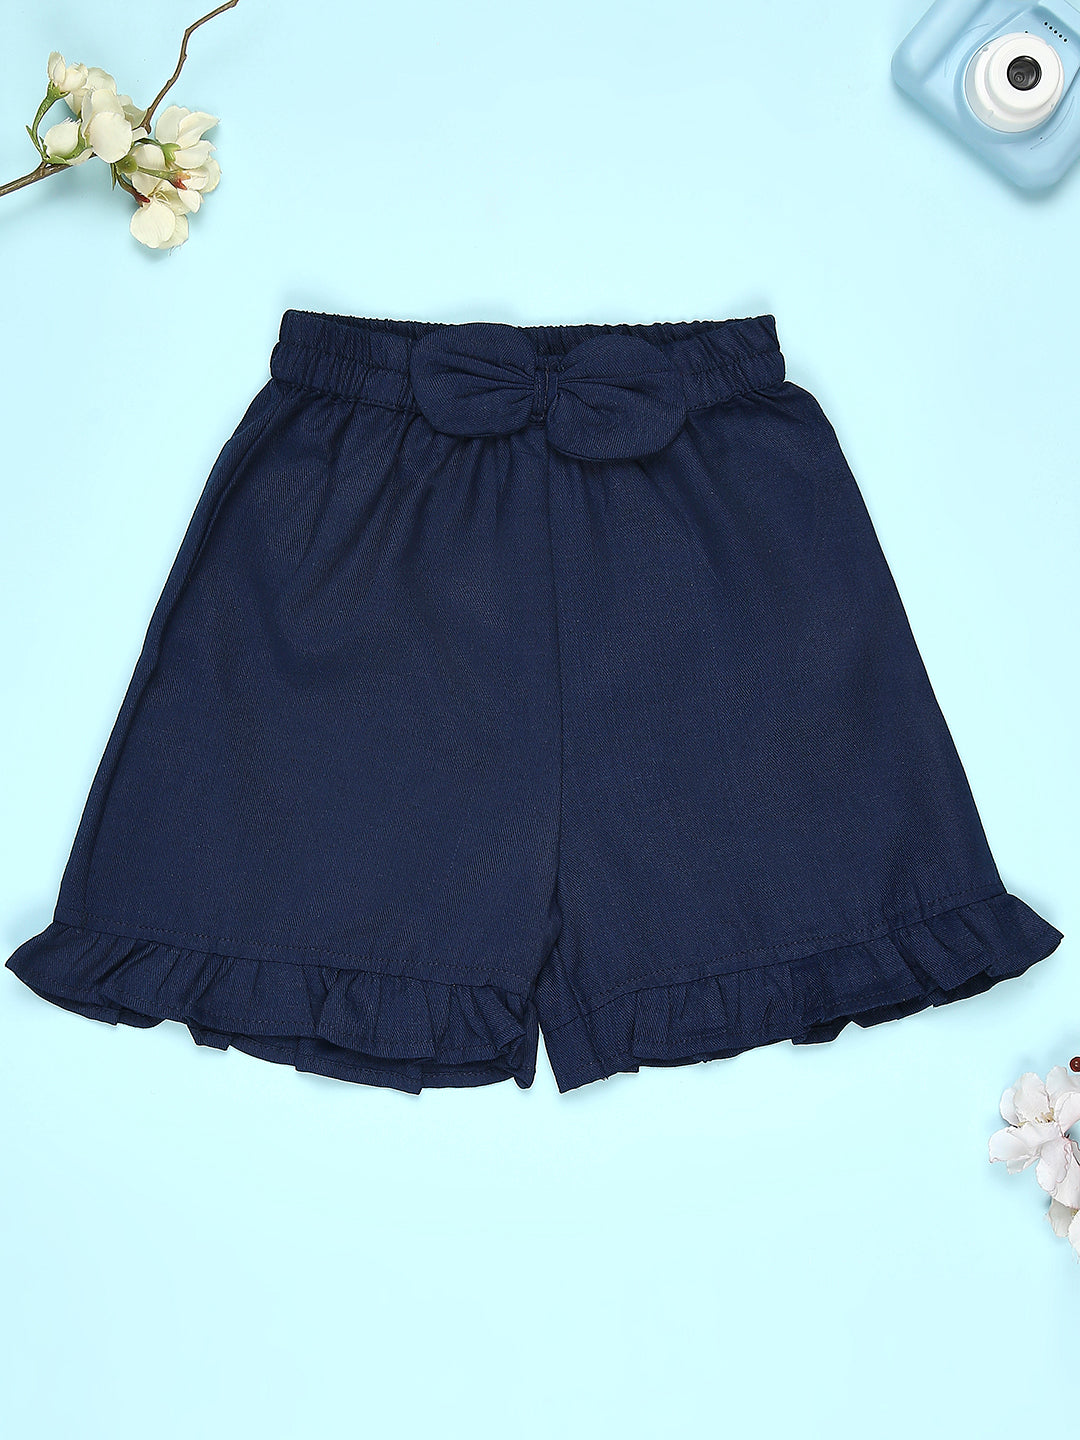 Cutiekins Girls Solid Embellished Small Bow Short -Navy Blue